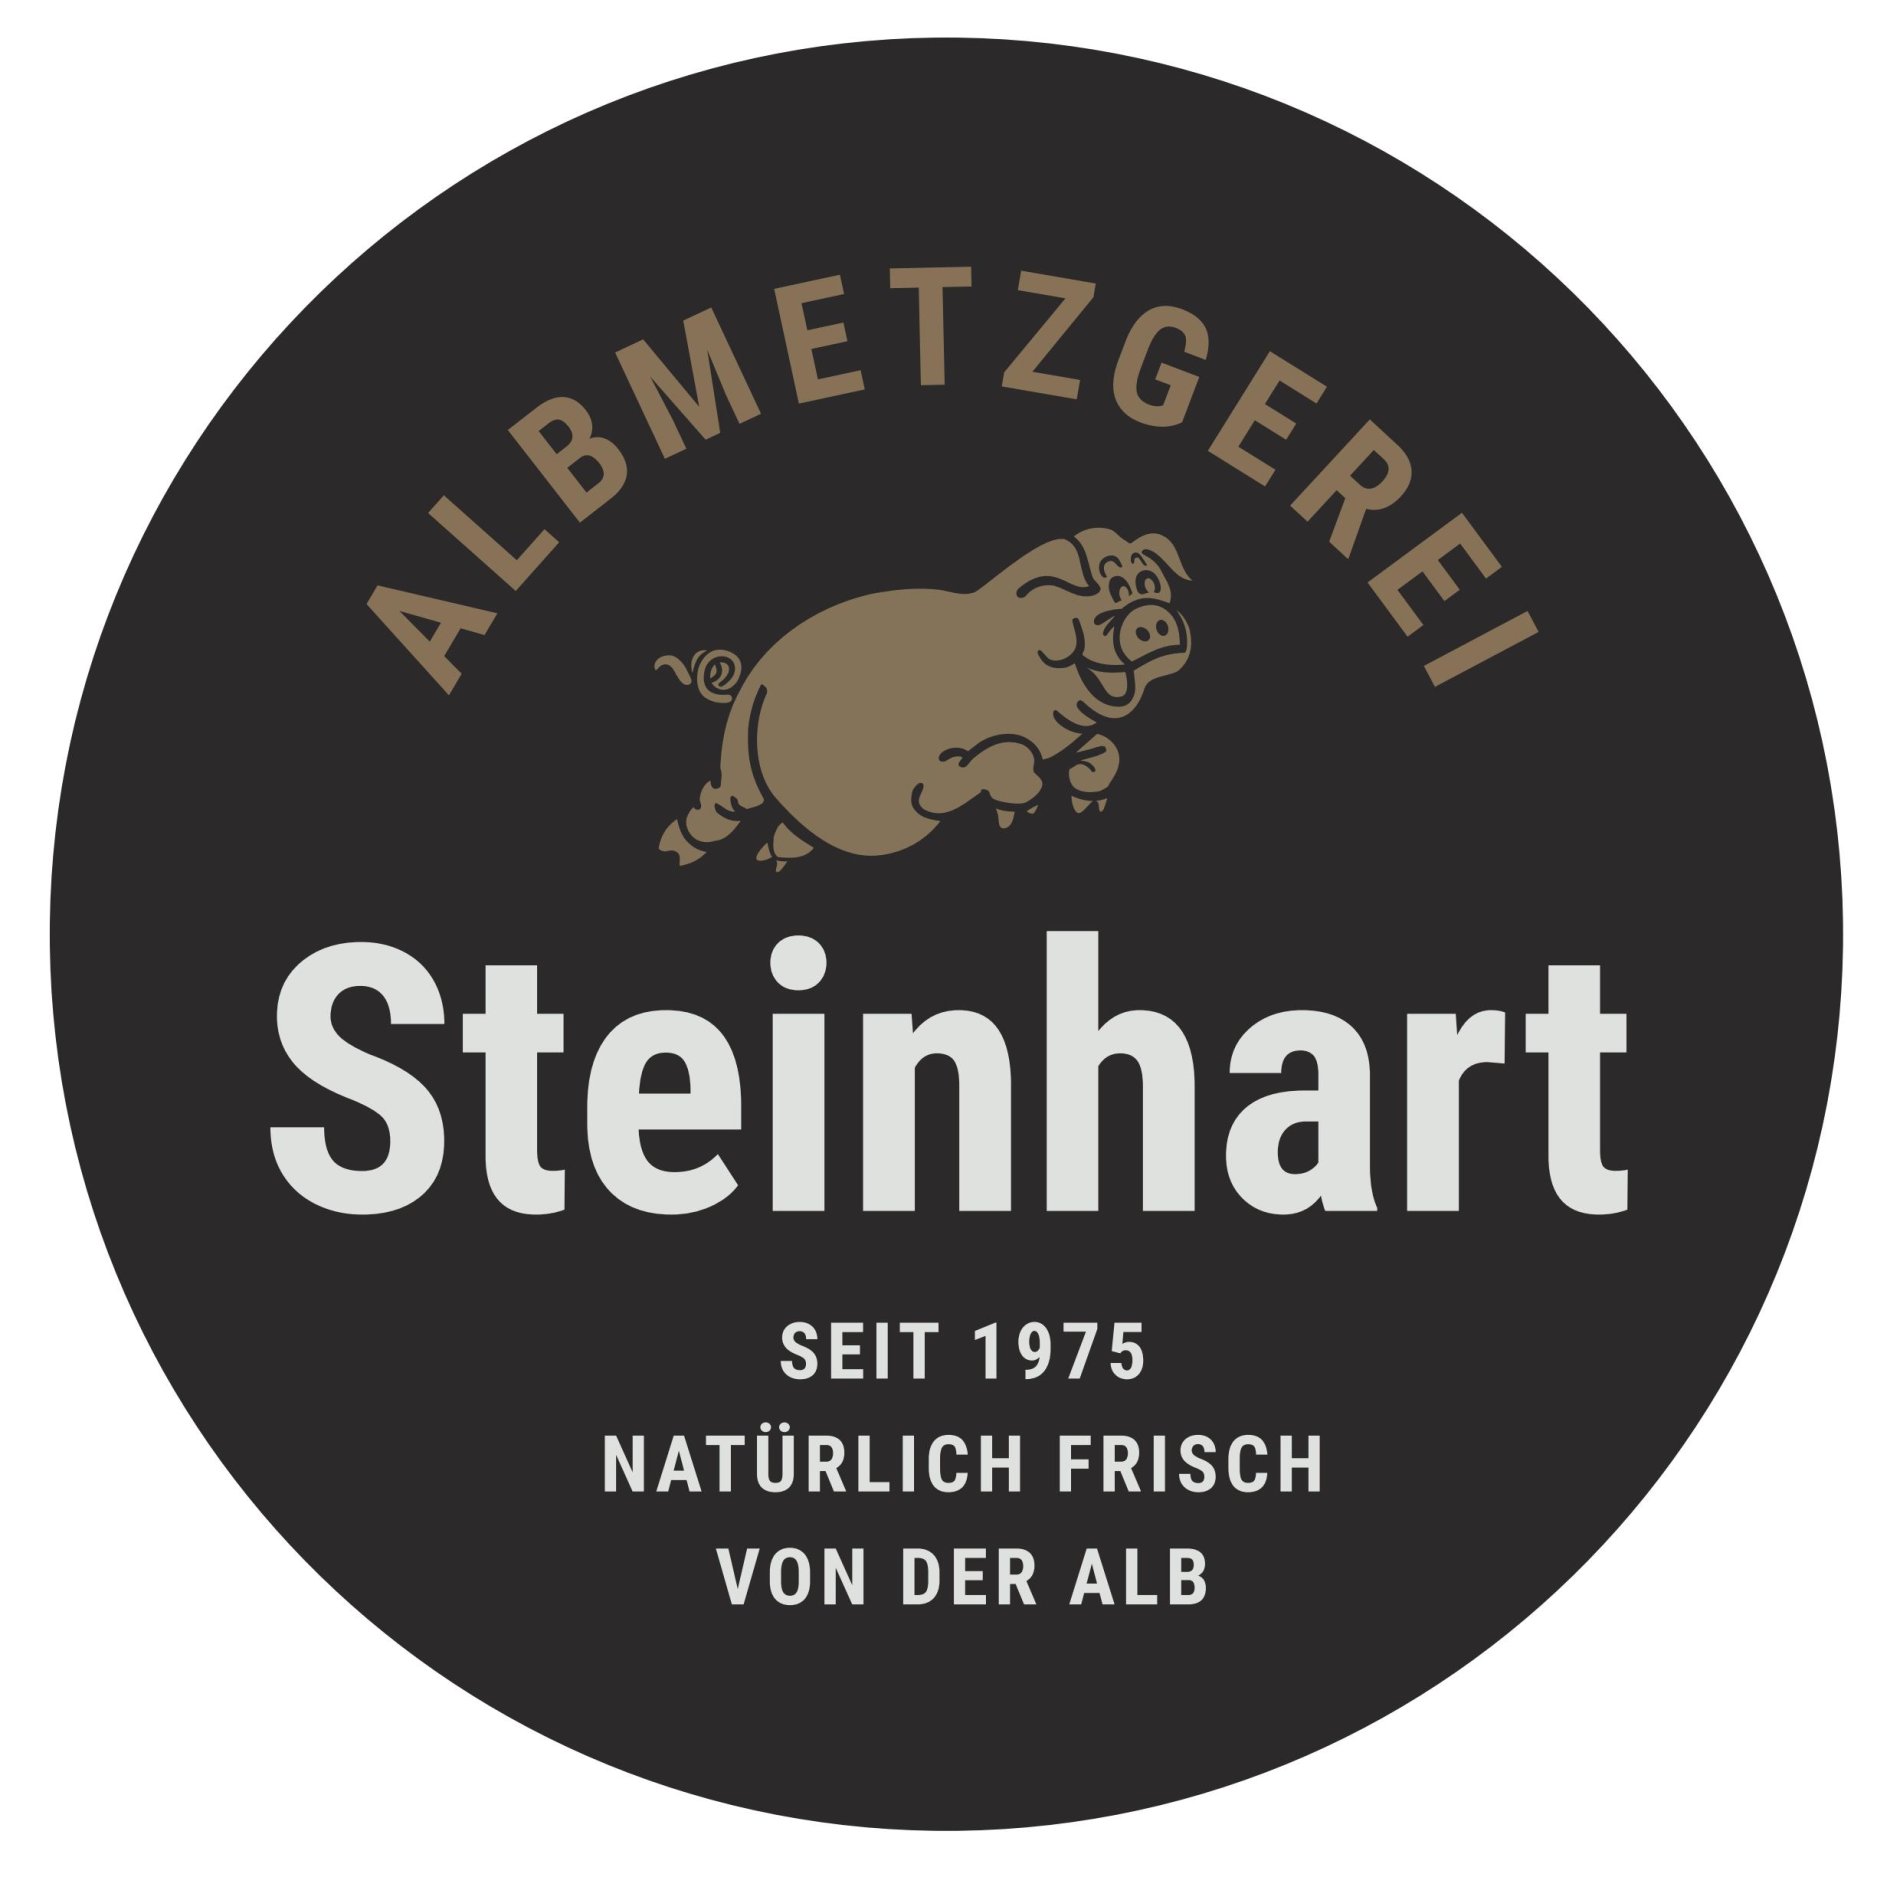 Geschäfte in Albstadt: Albmetzgerei Steinhart in Albstadt-Ebingen